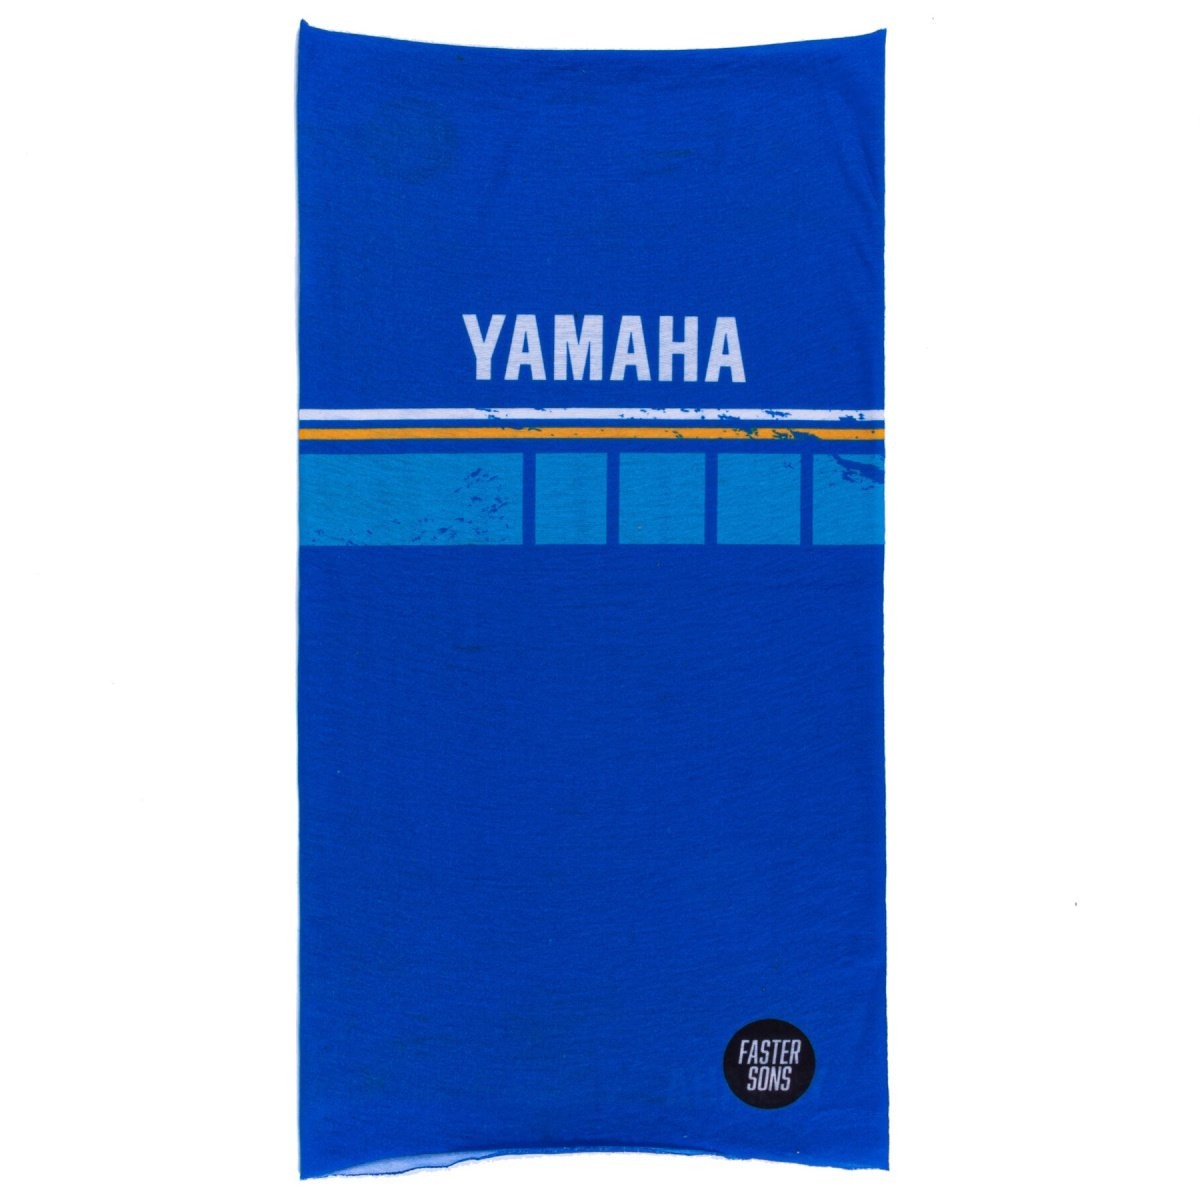 Yamaha Faster Sons 2023 Blue